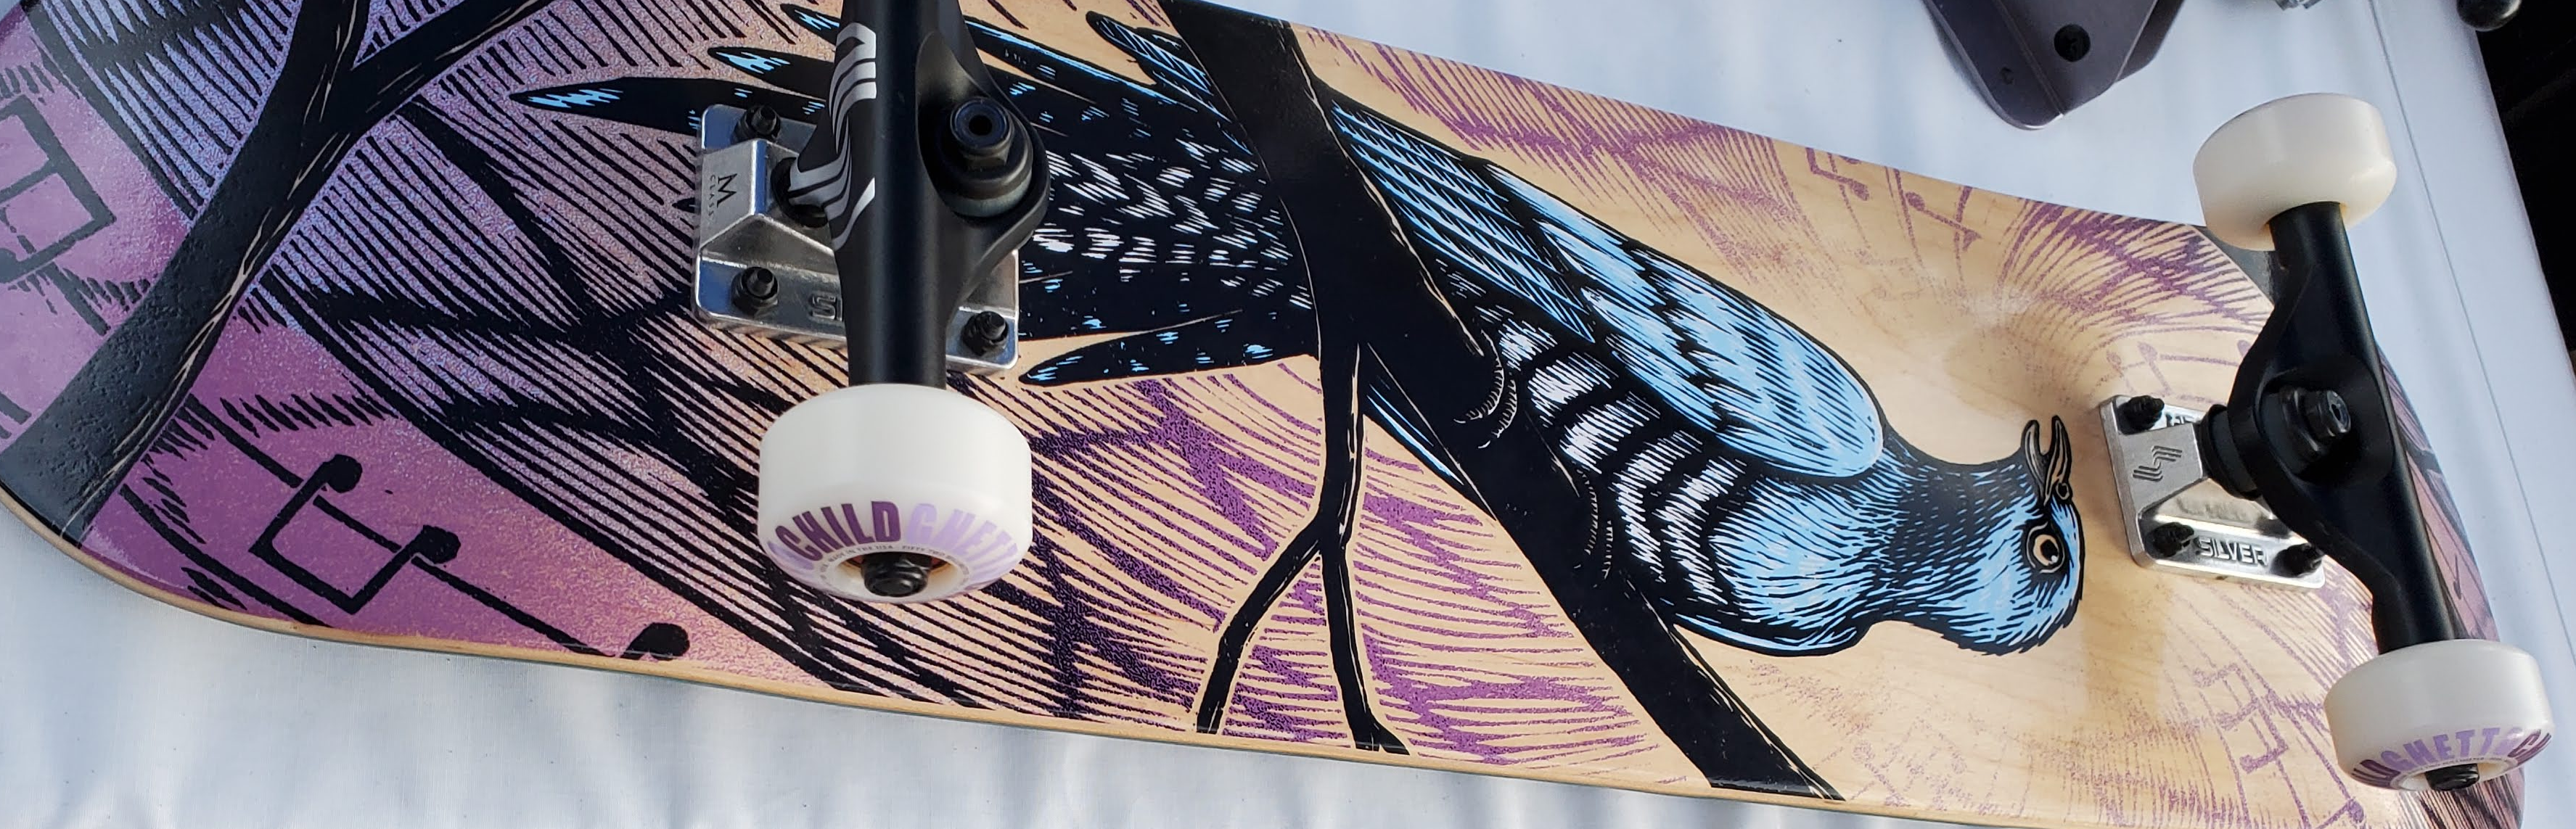 Techne Skateboards - Artist Designed Decks and Custom Completes available at artondeck.com